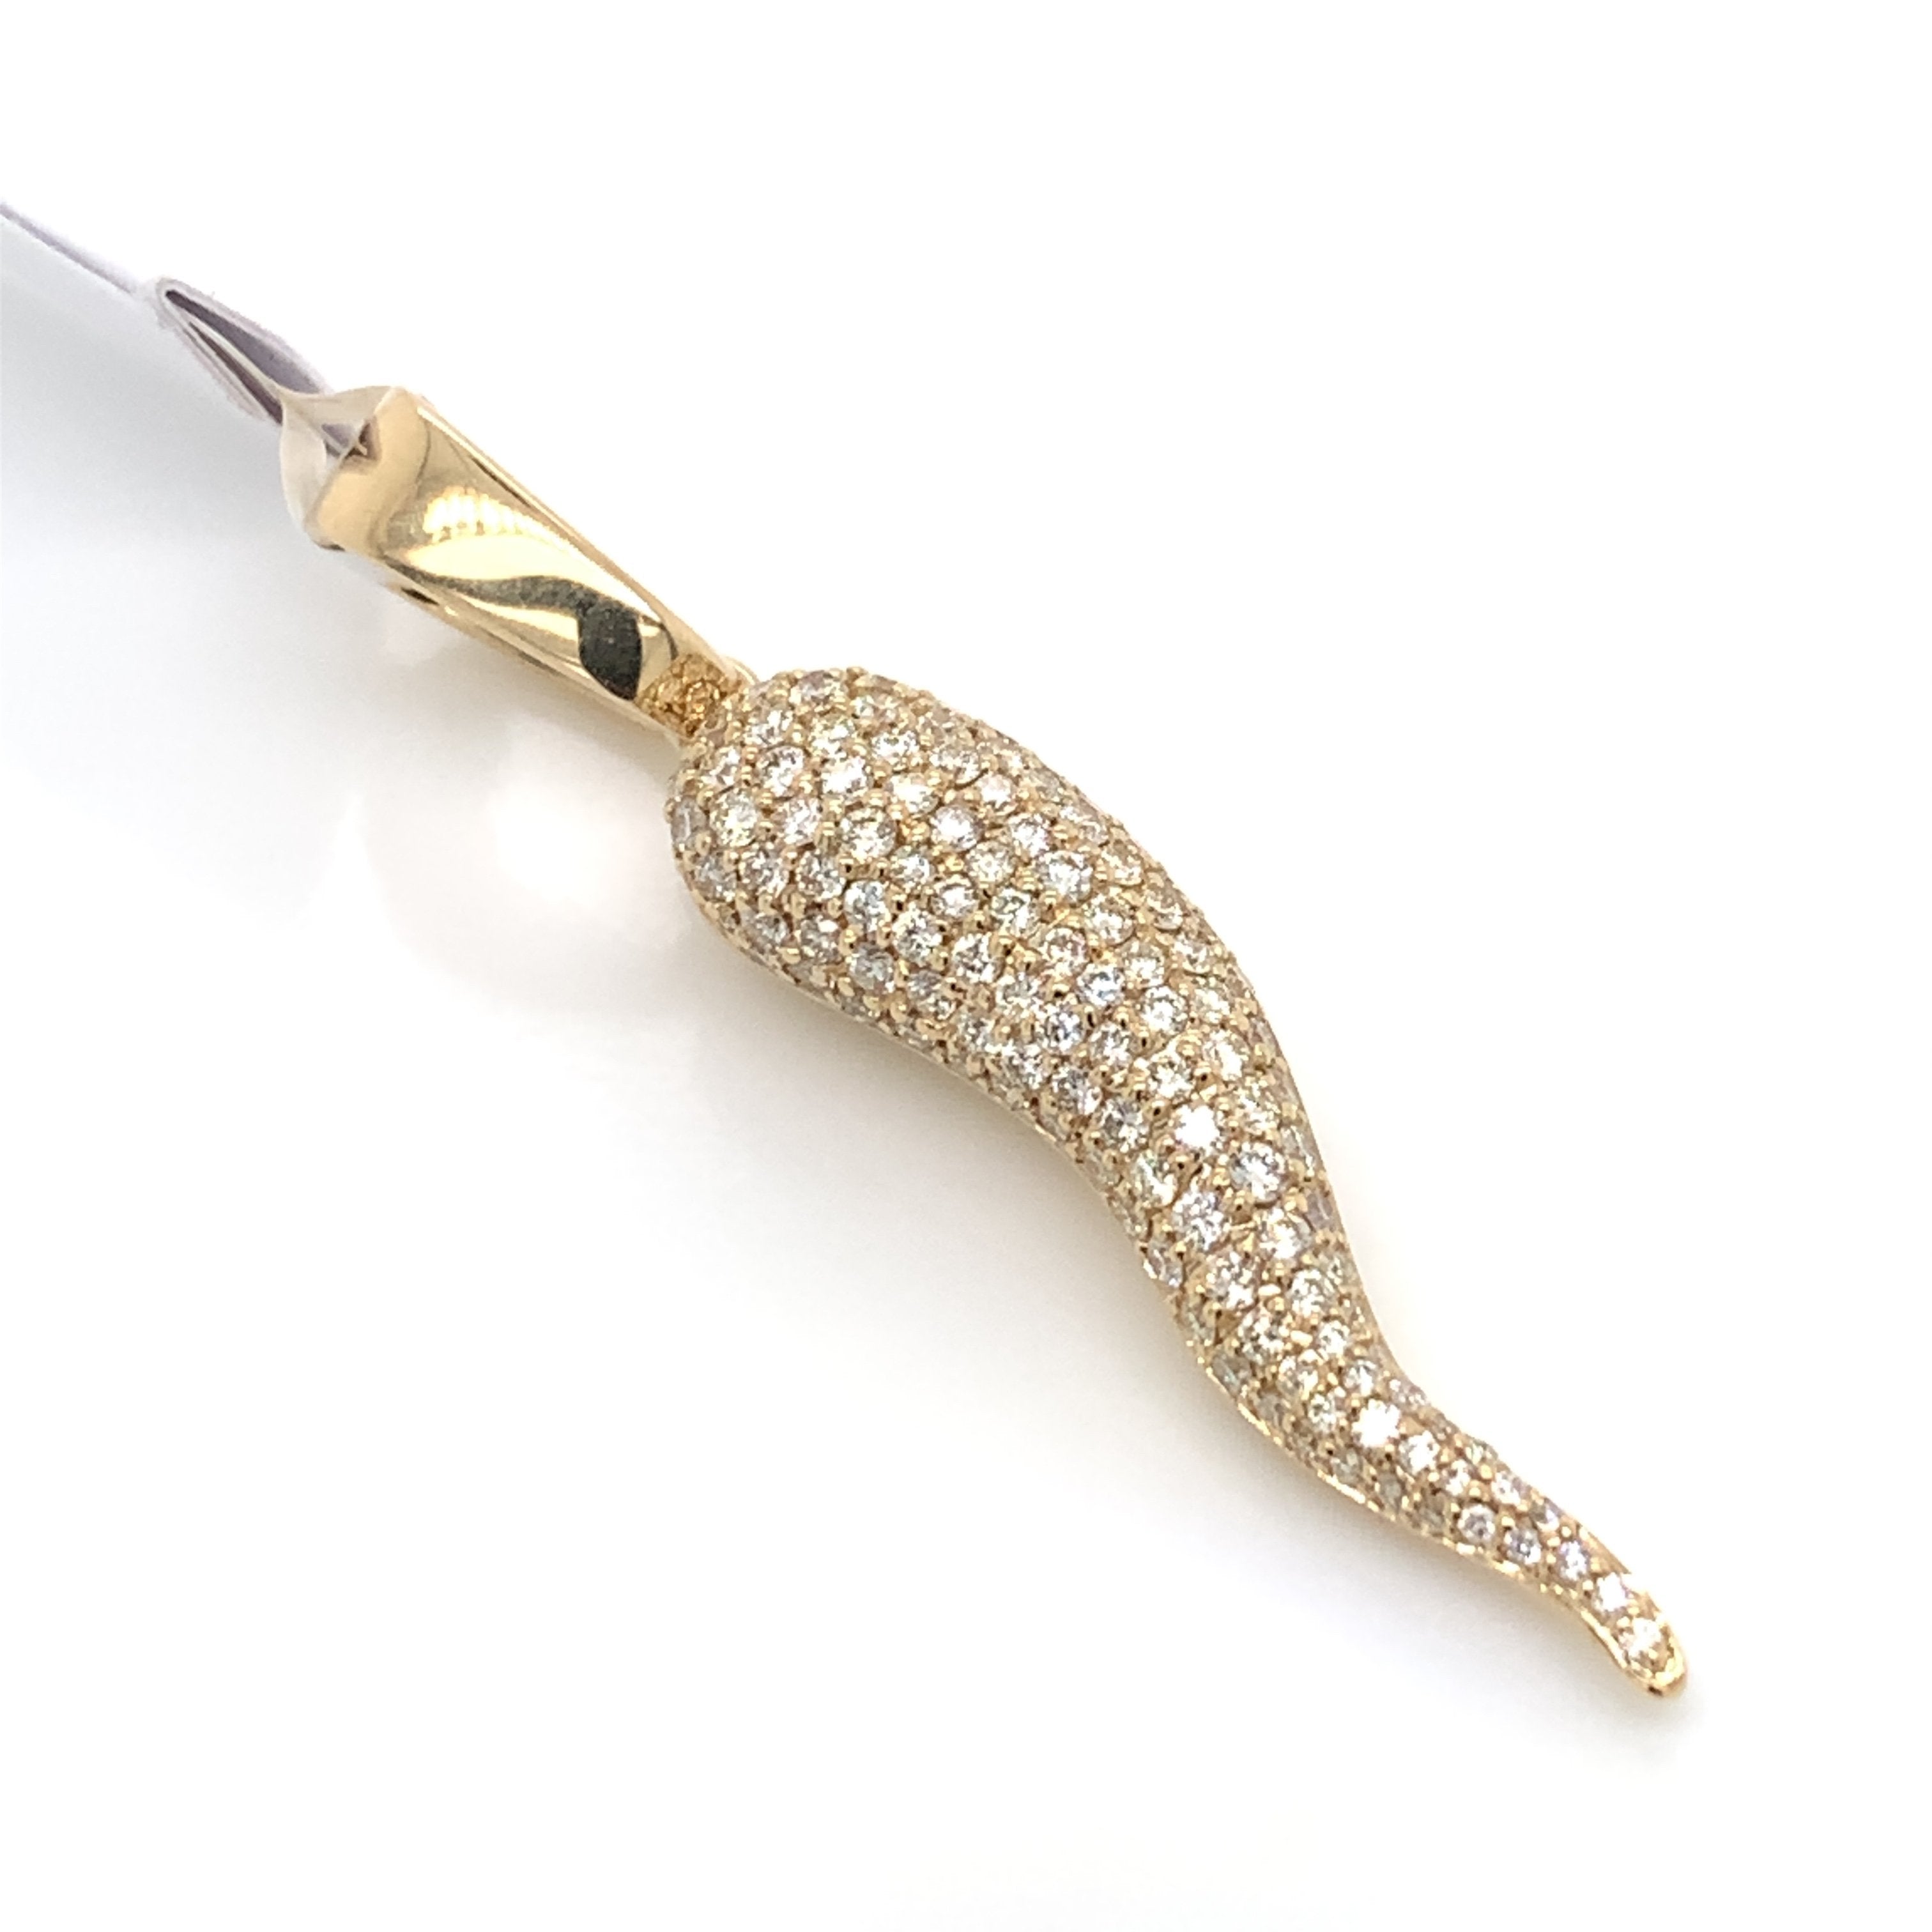 1.00 CT. Diamond Horn Pendant in Gold - White Carat Diamonds 